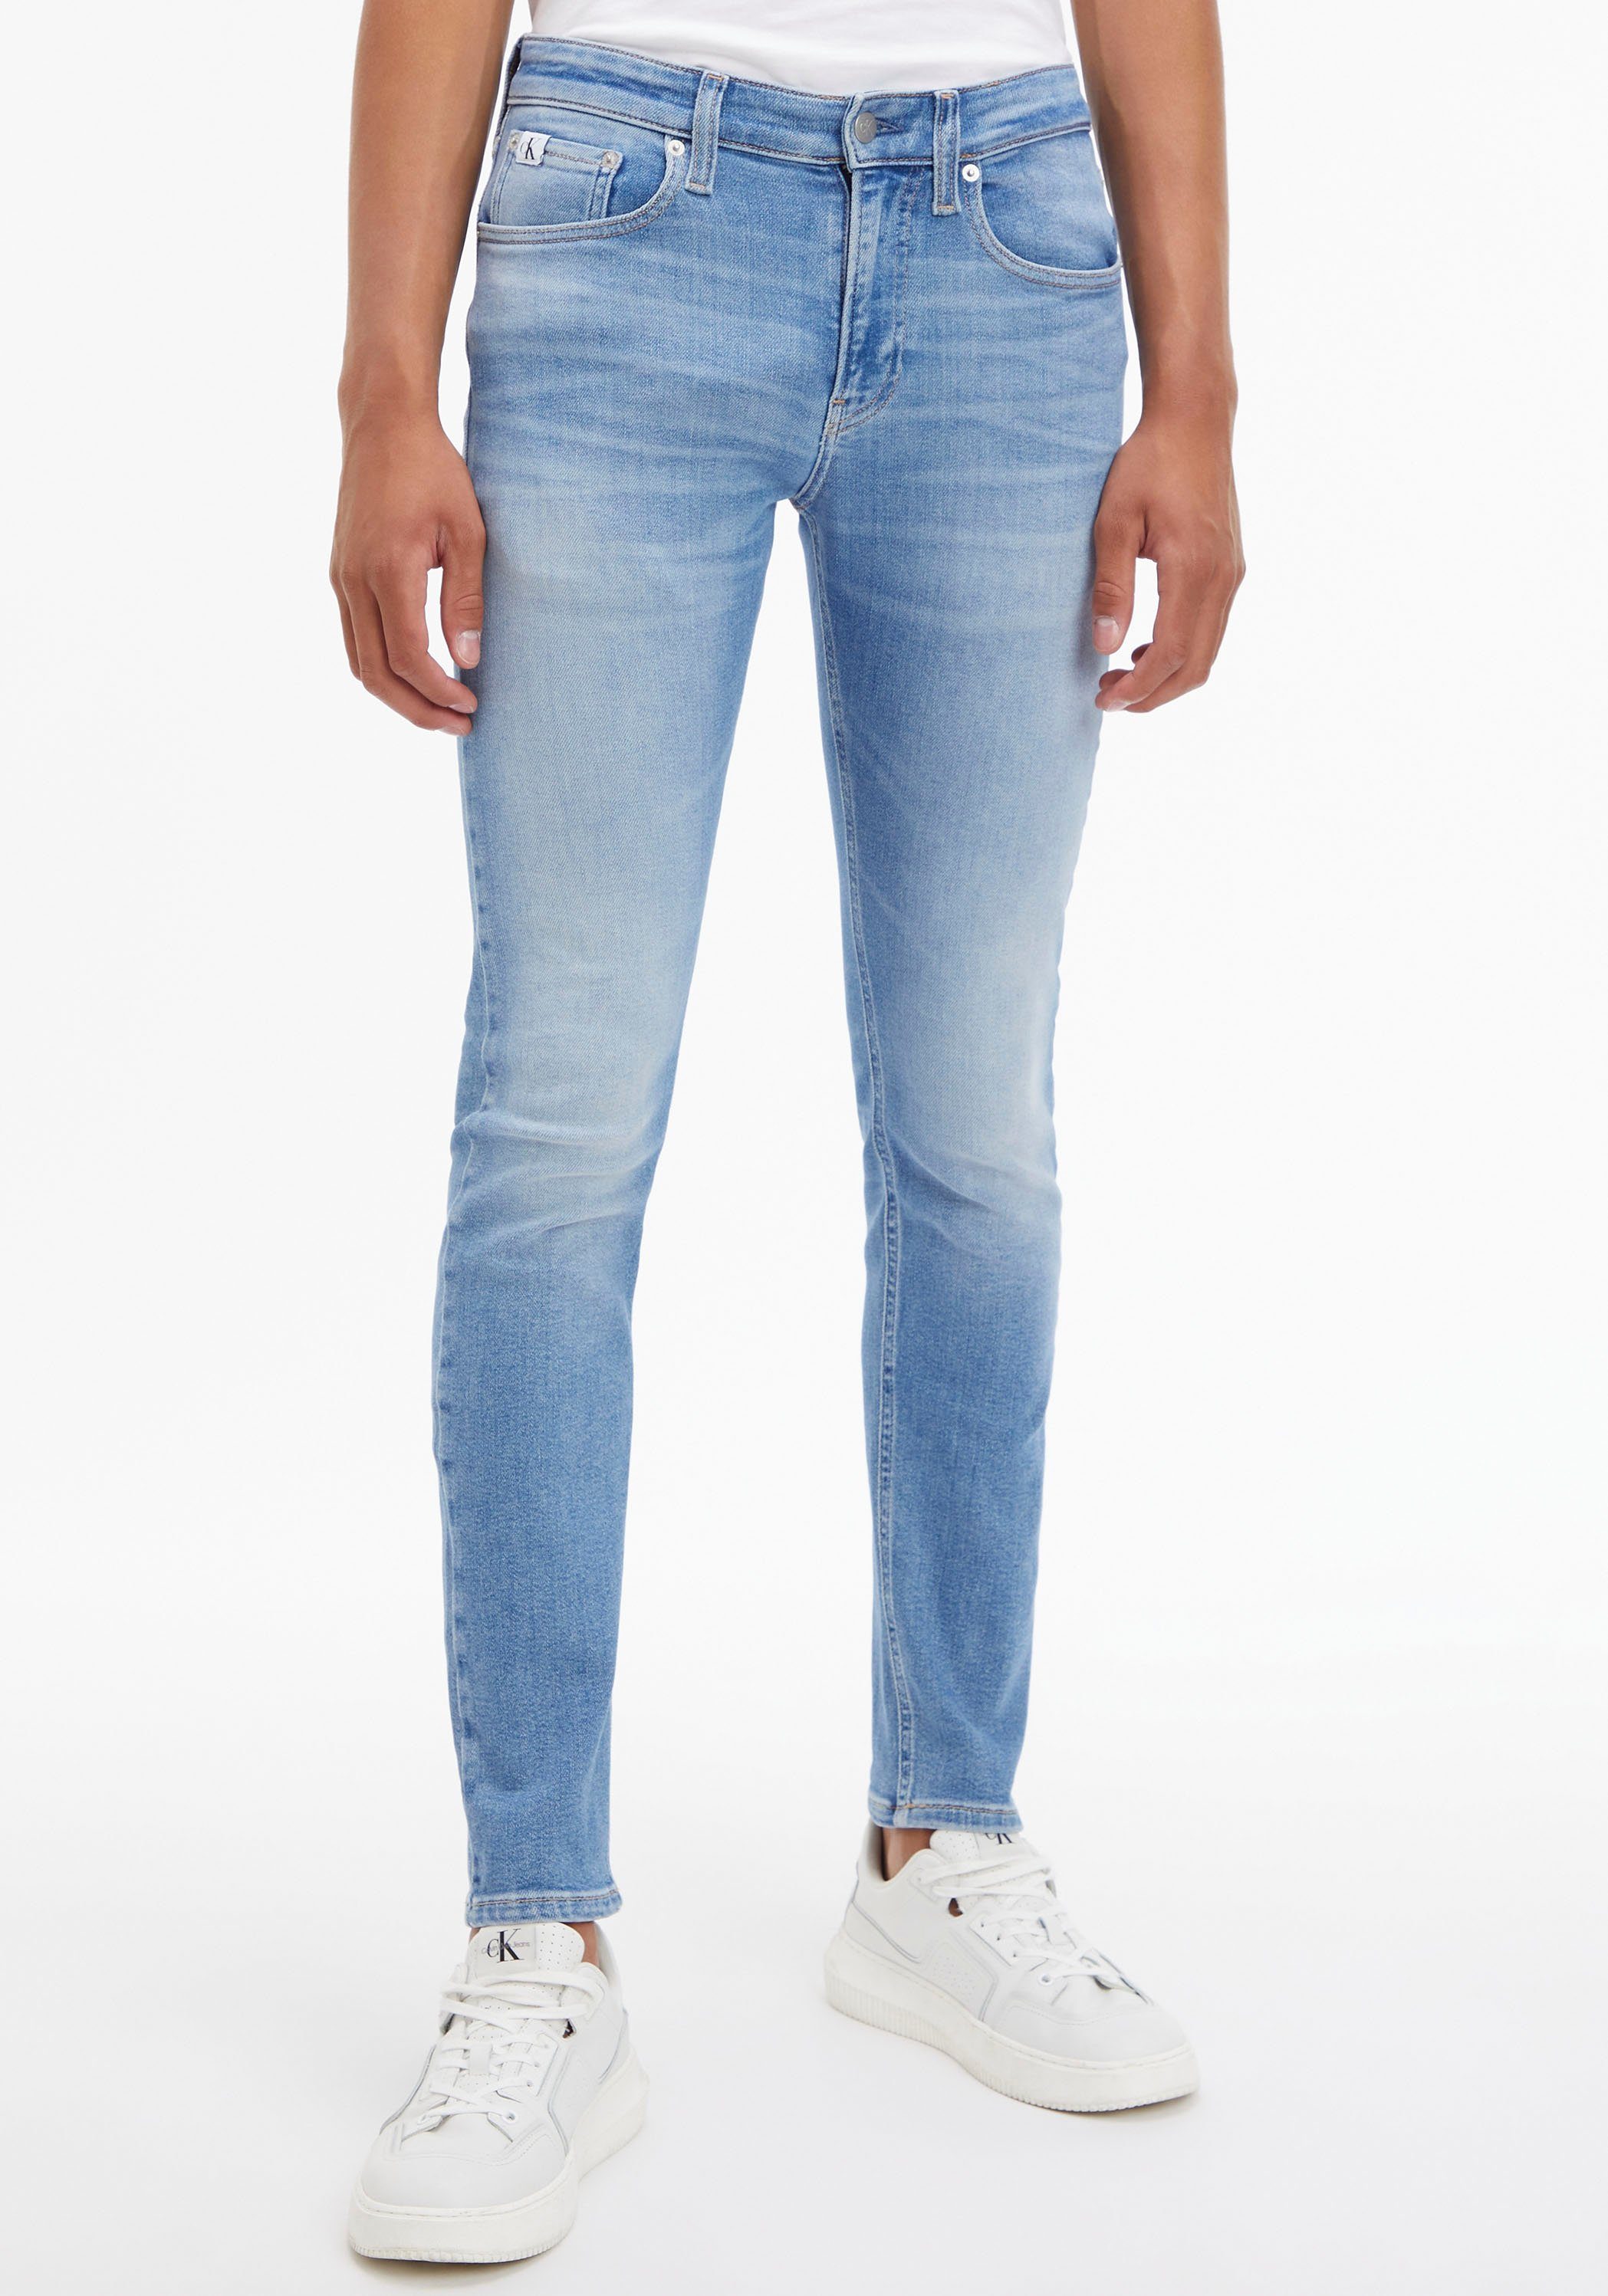 【berühmt】 Calvin Klein Jeans Skinny-fit-Jeans Denim 5-Pocket-Stil Medium im